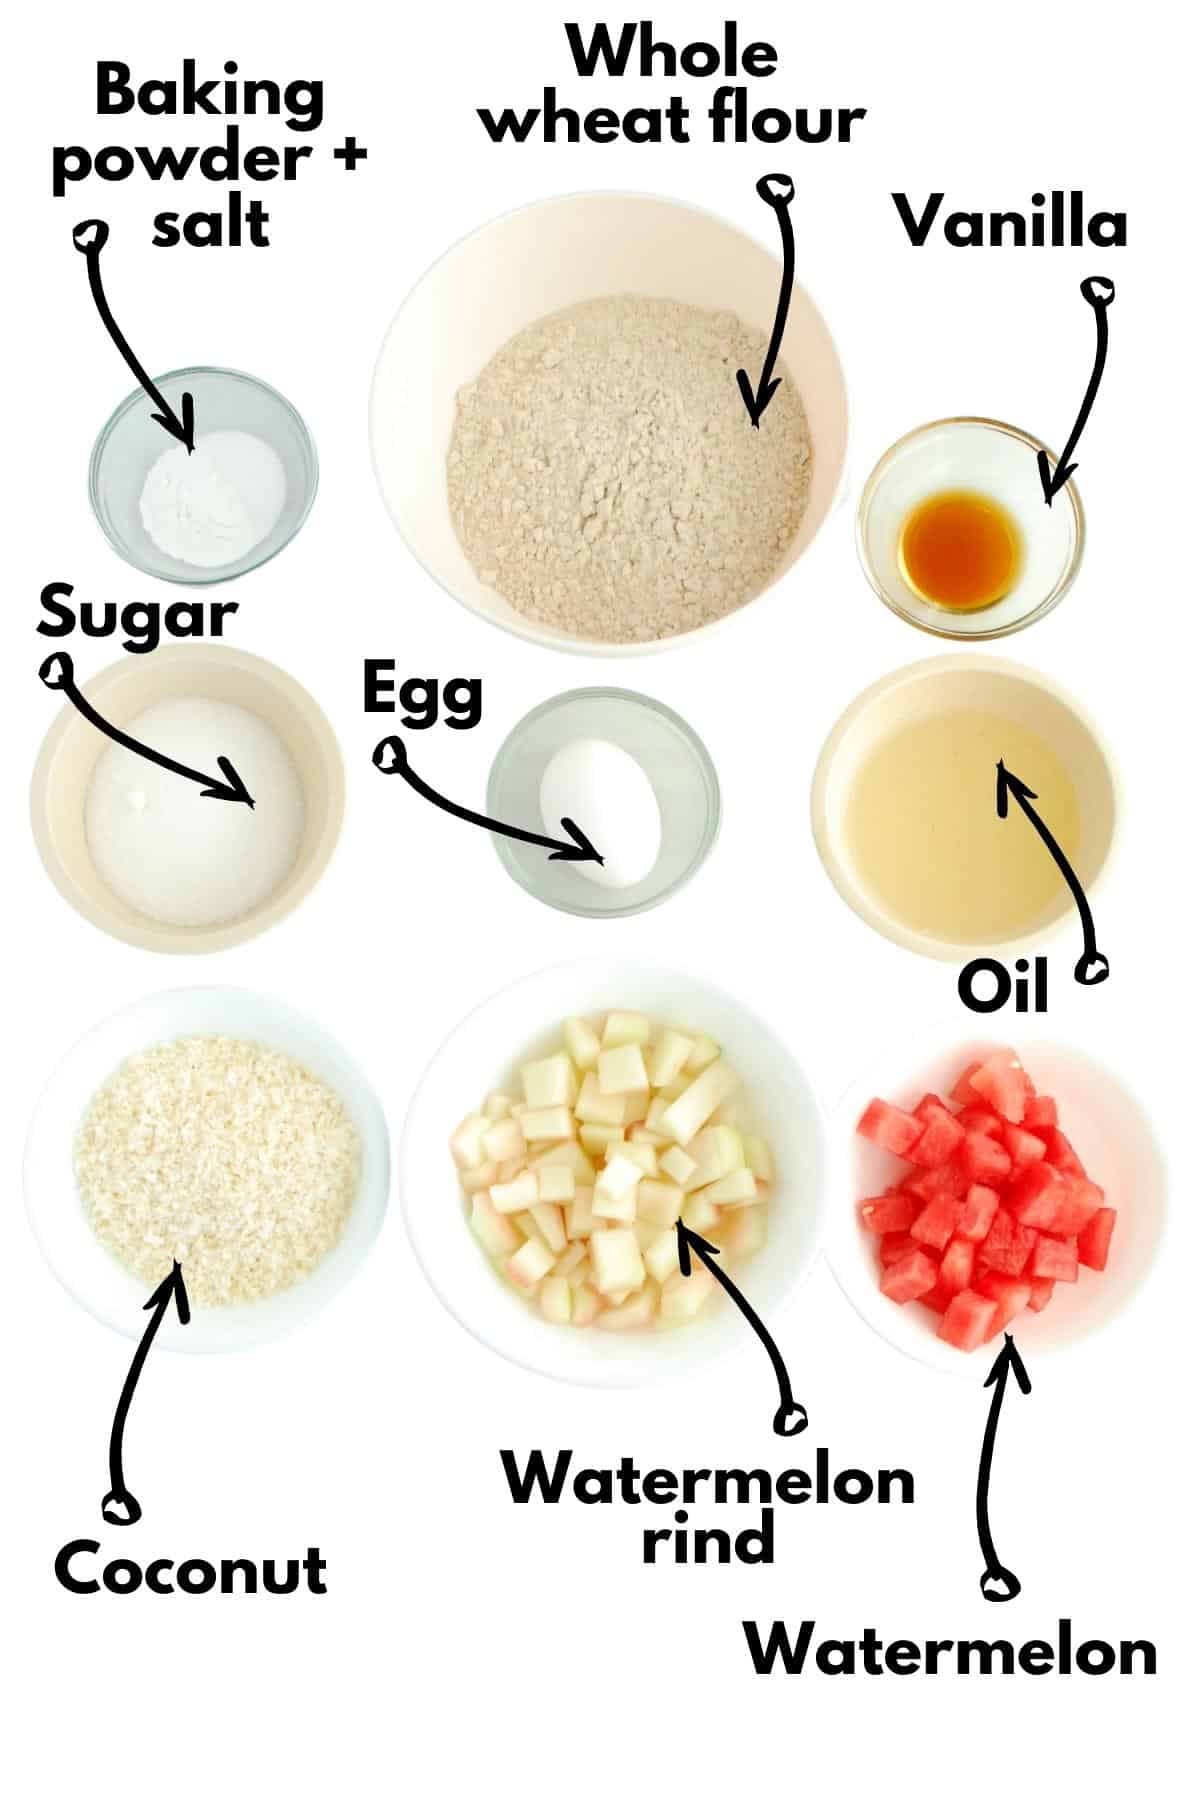 Coconut, sugar, baking powder, salt, flour, egg, watermelon flesh, watermelon rind, vanilla, and oil.